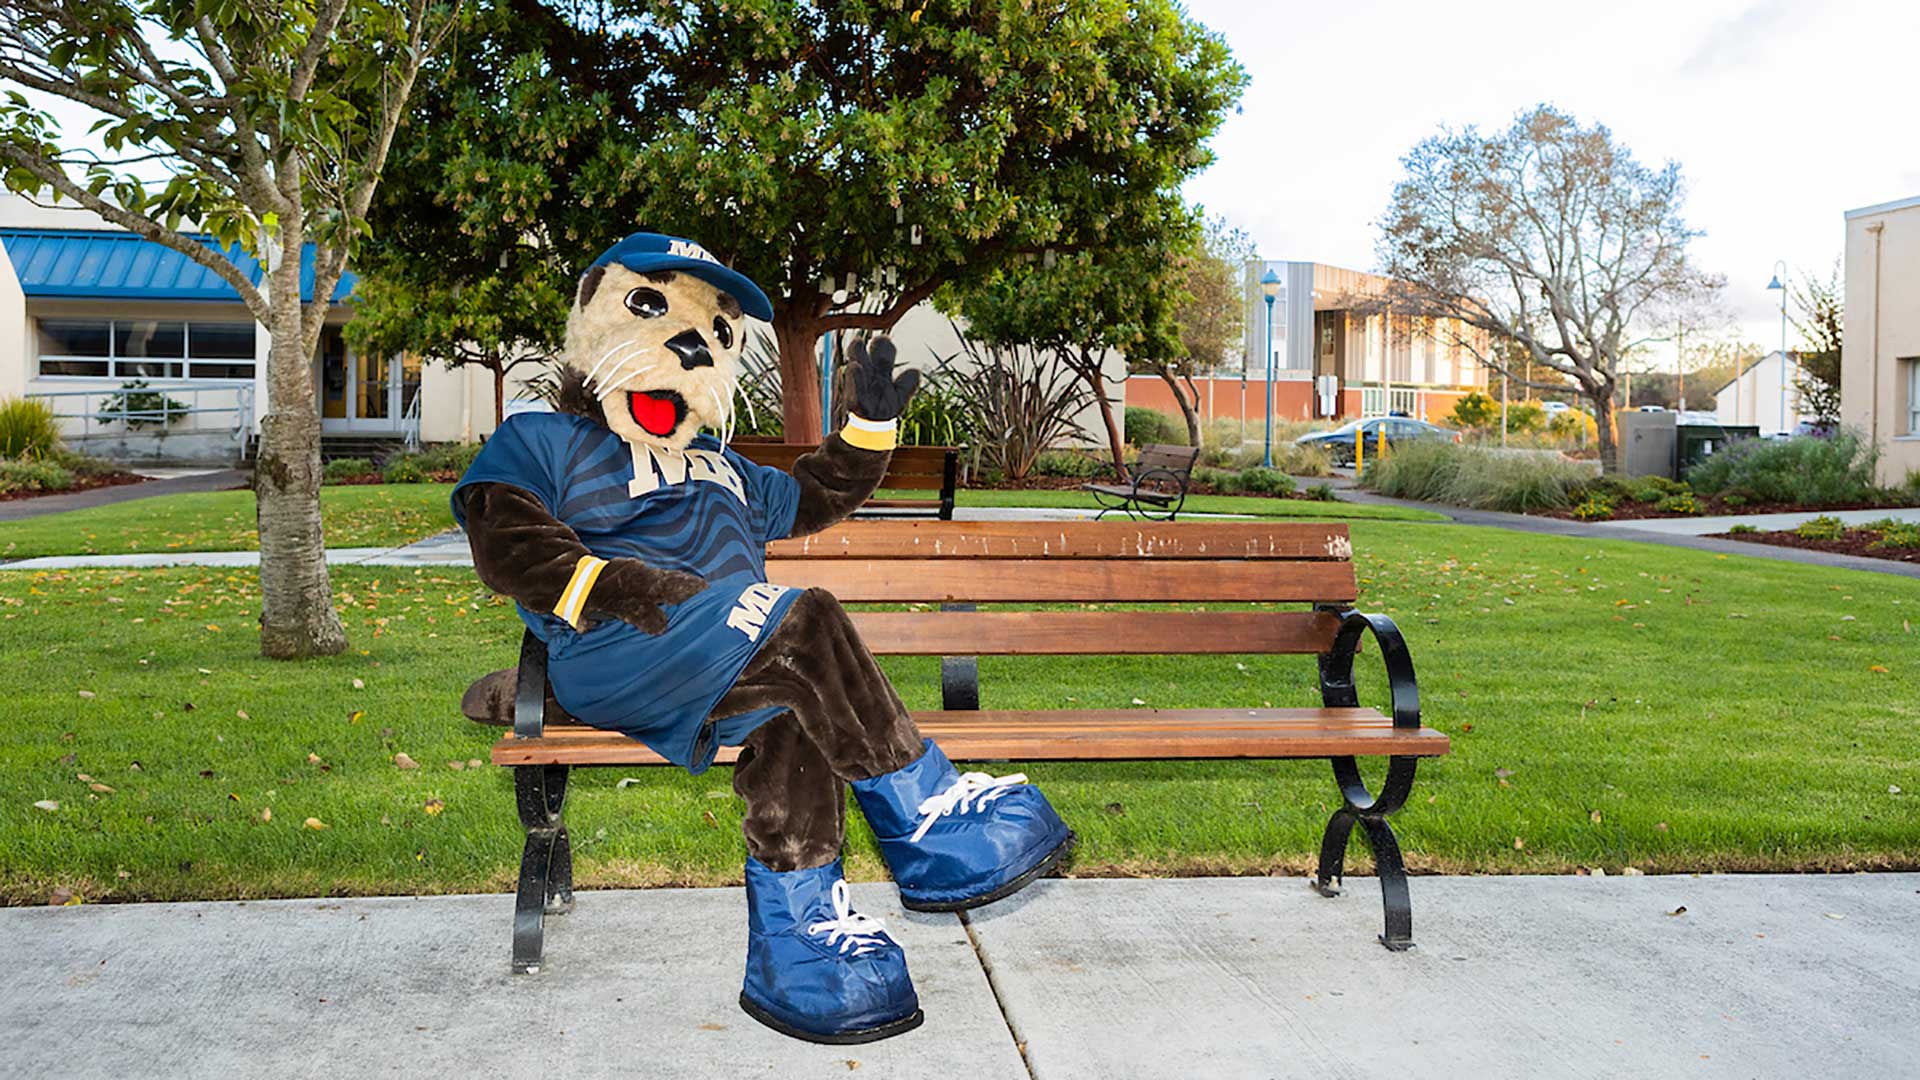 CSUMB Mascot Monte waving on bench